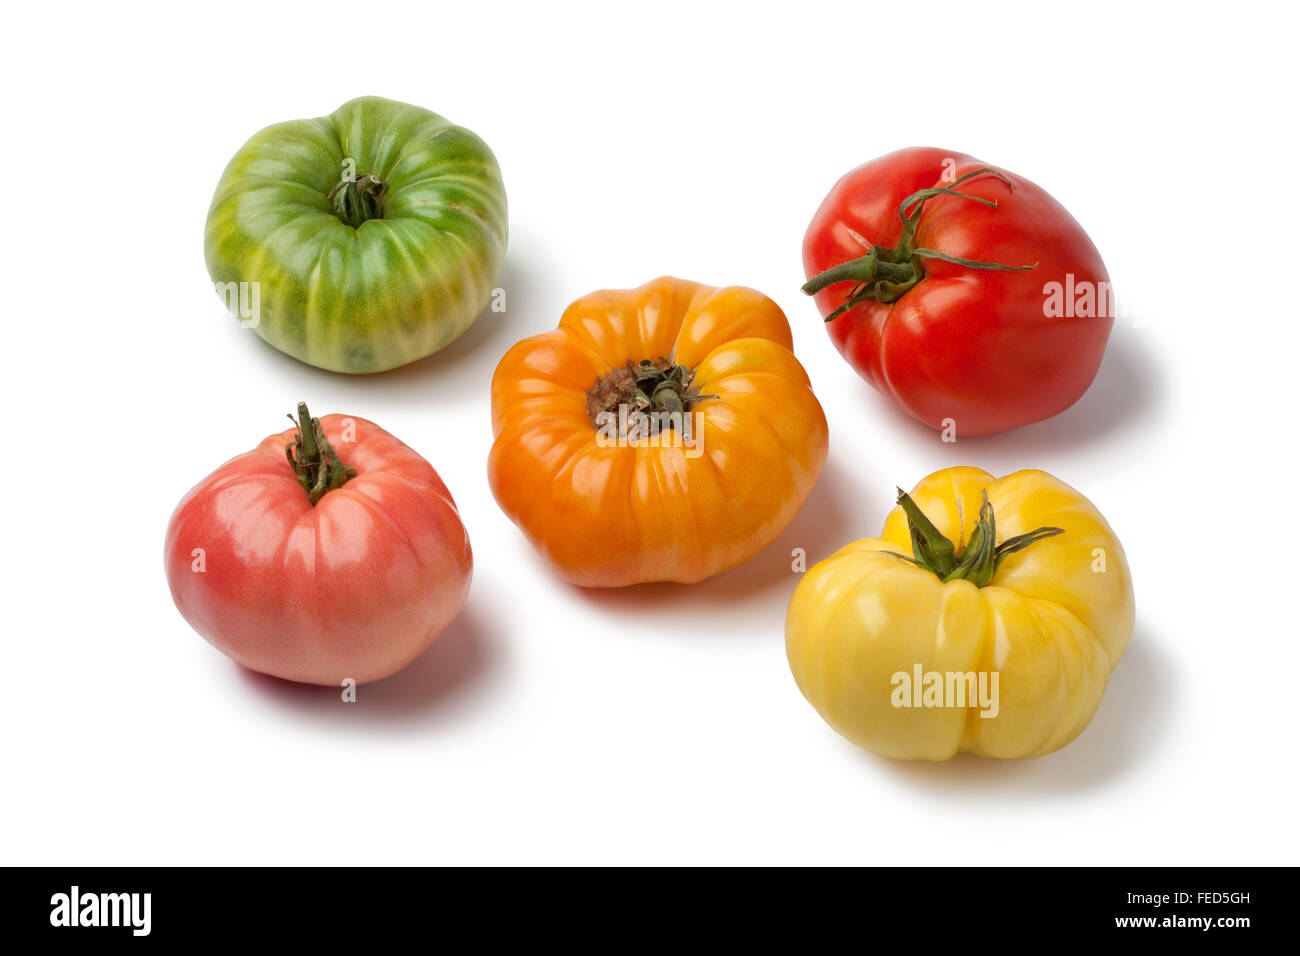 Diversity of beefheart tomatoes on white background Stock Photo